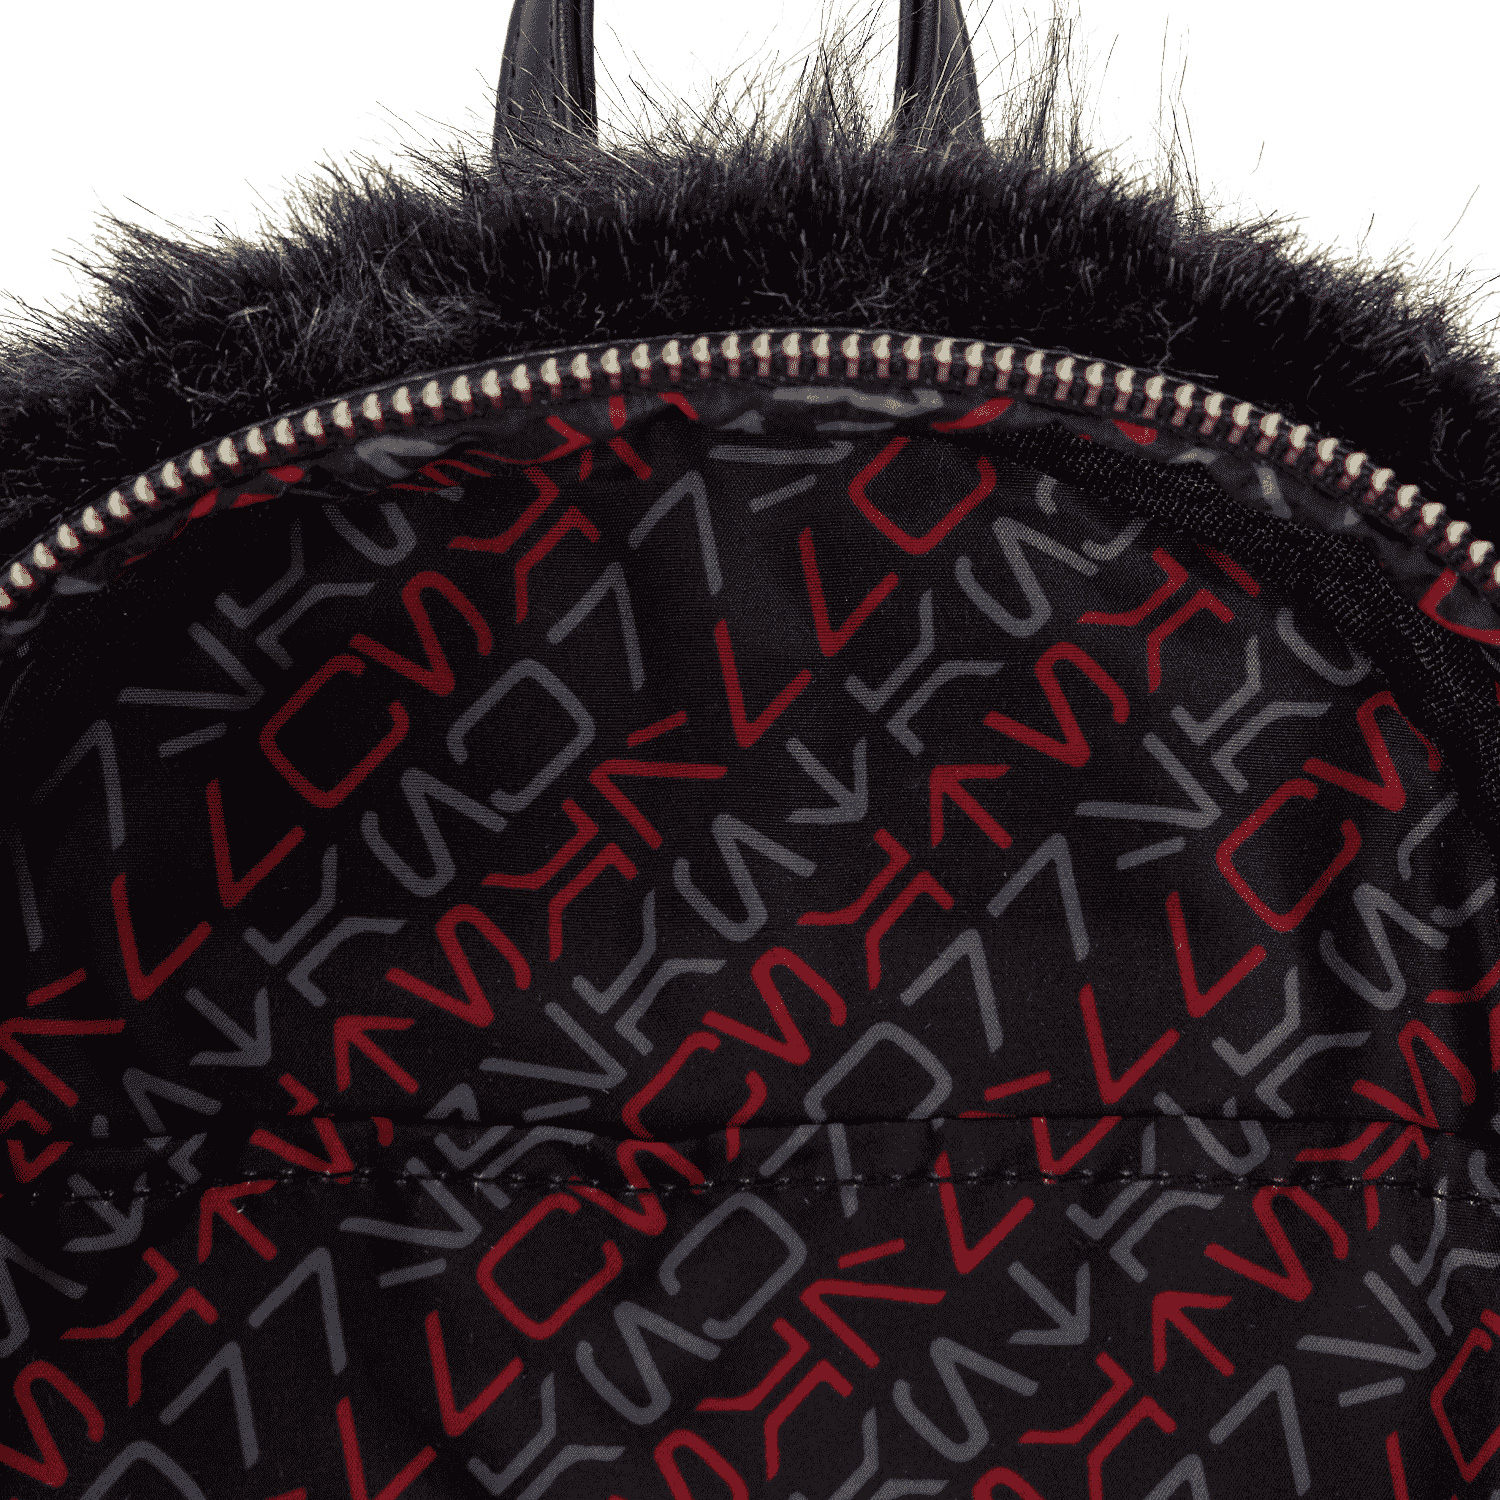 Wookie Krrsantan Mini-Backpack with Black Fur (Star Wars Book of Boba Fett)